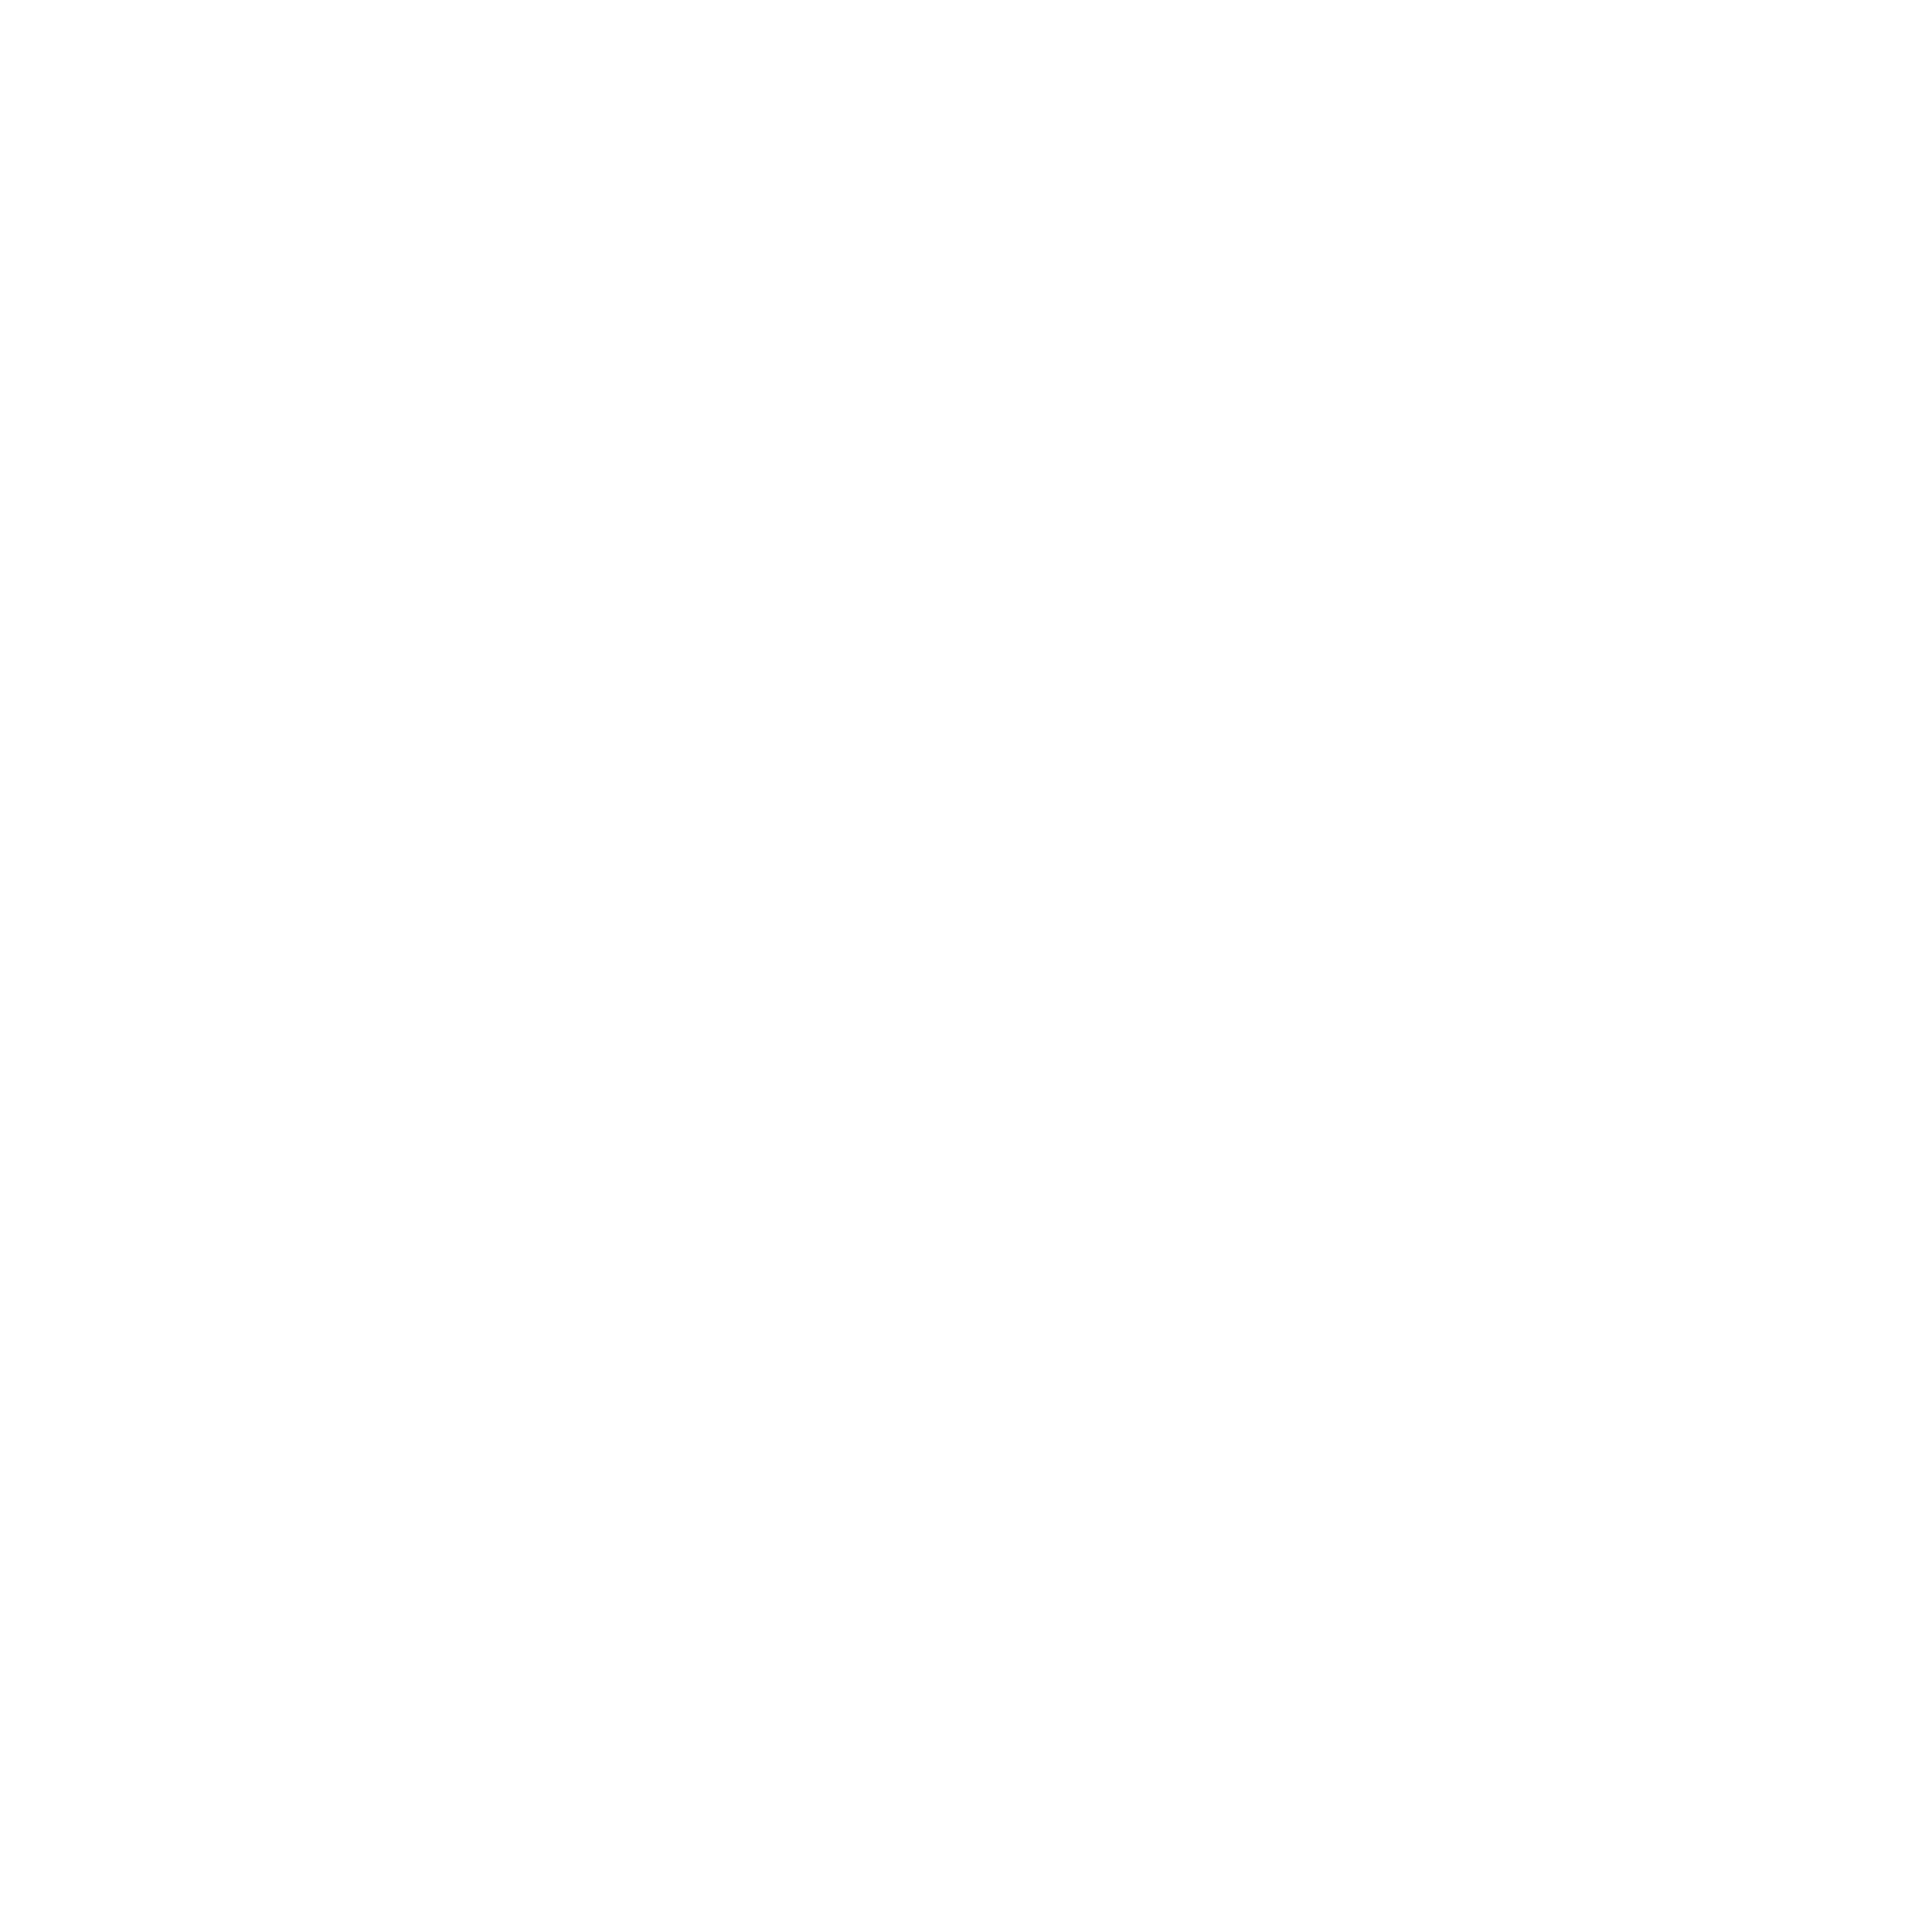 Defacto Digital Consulting